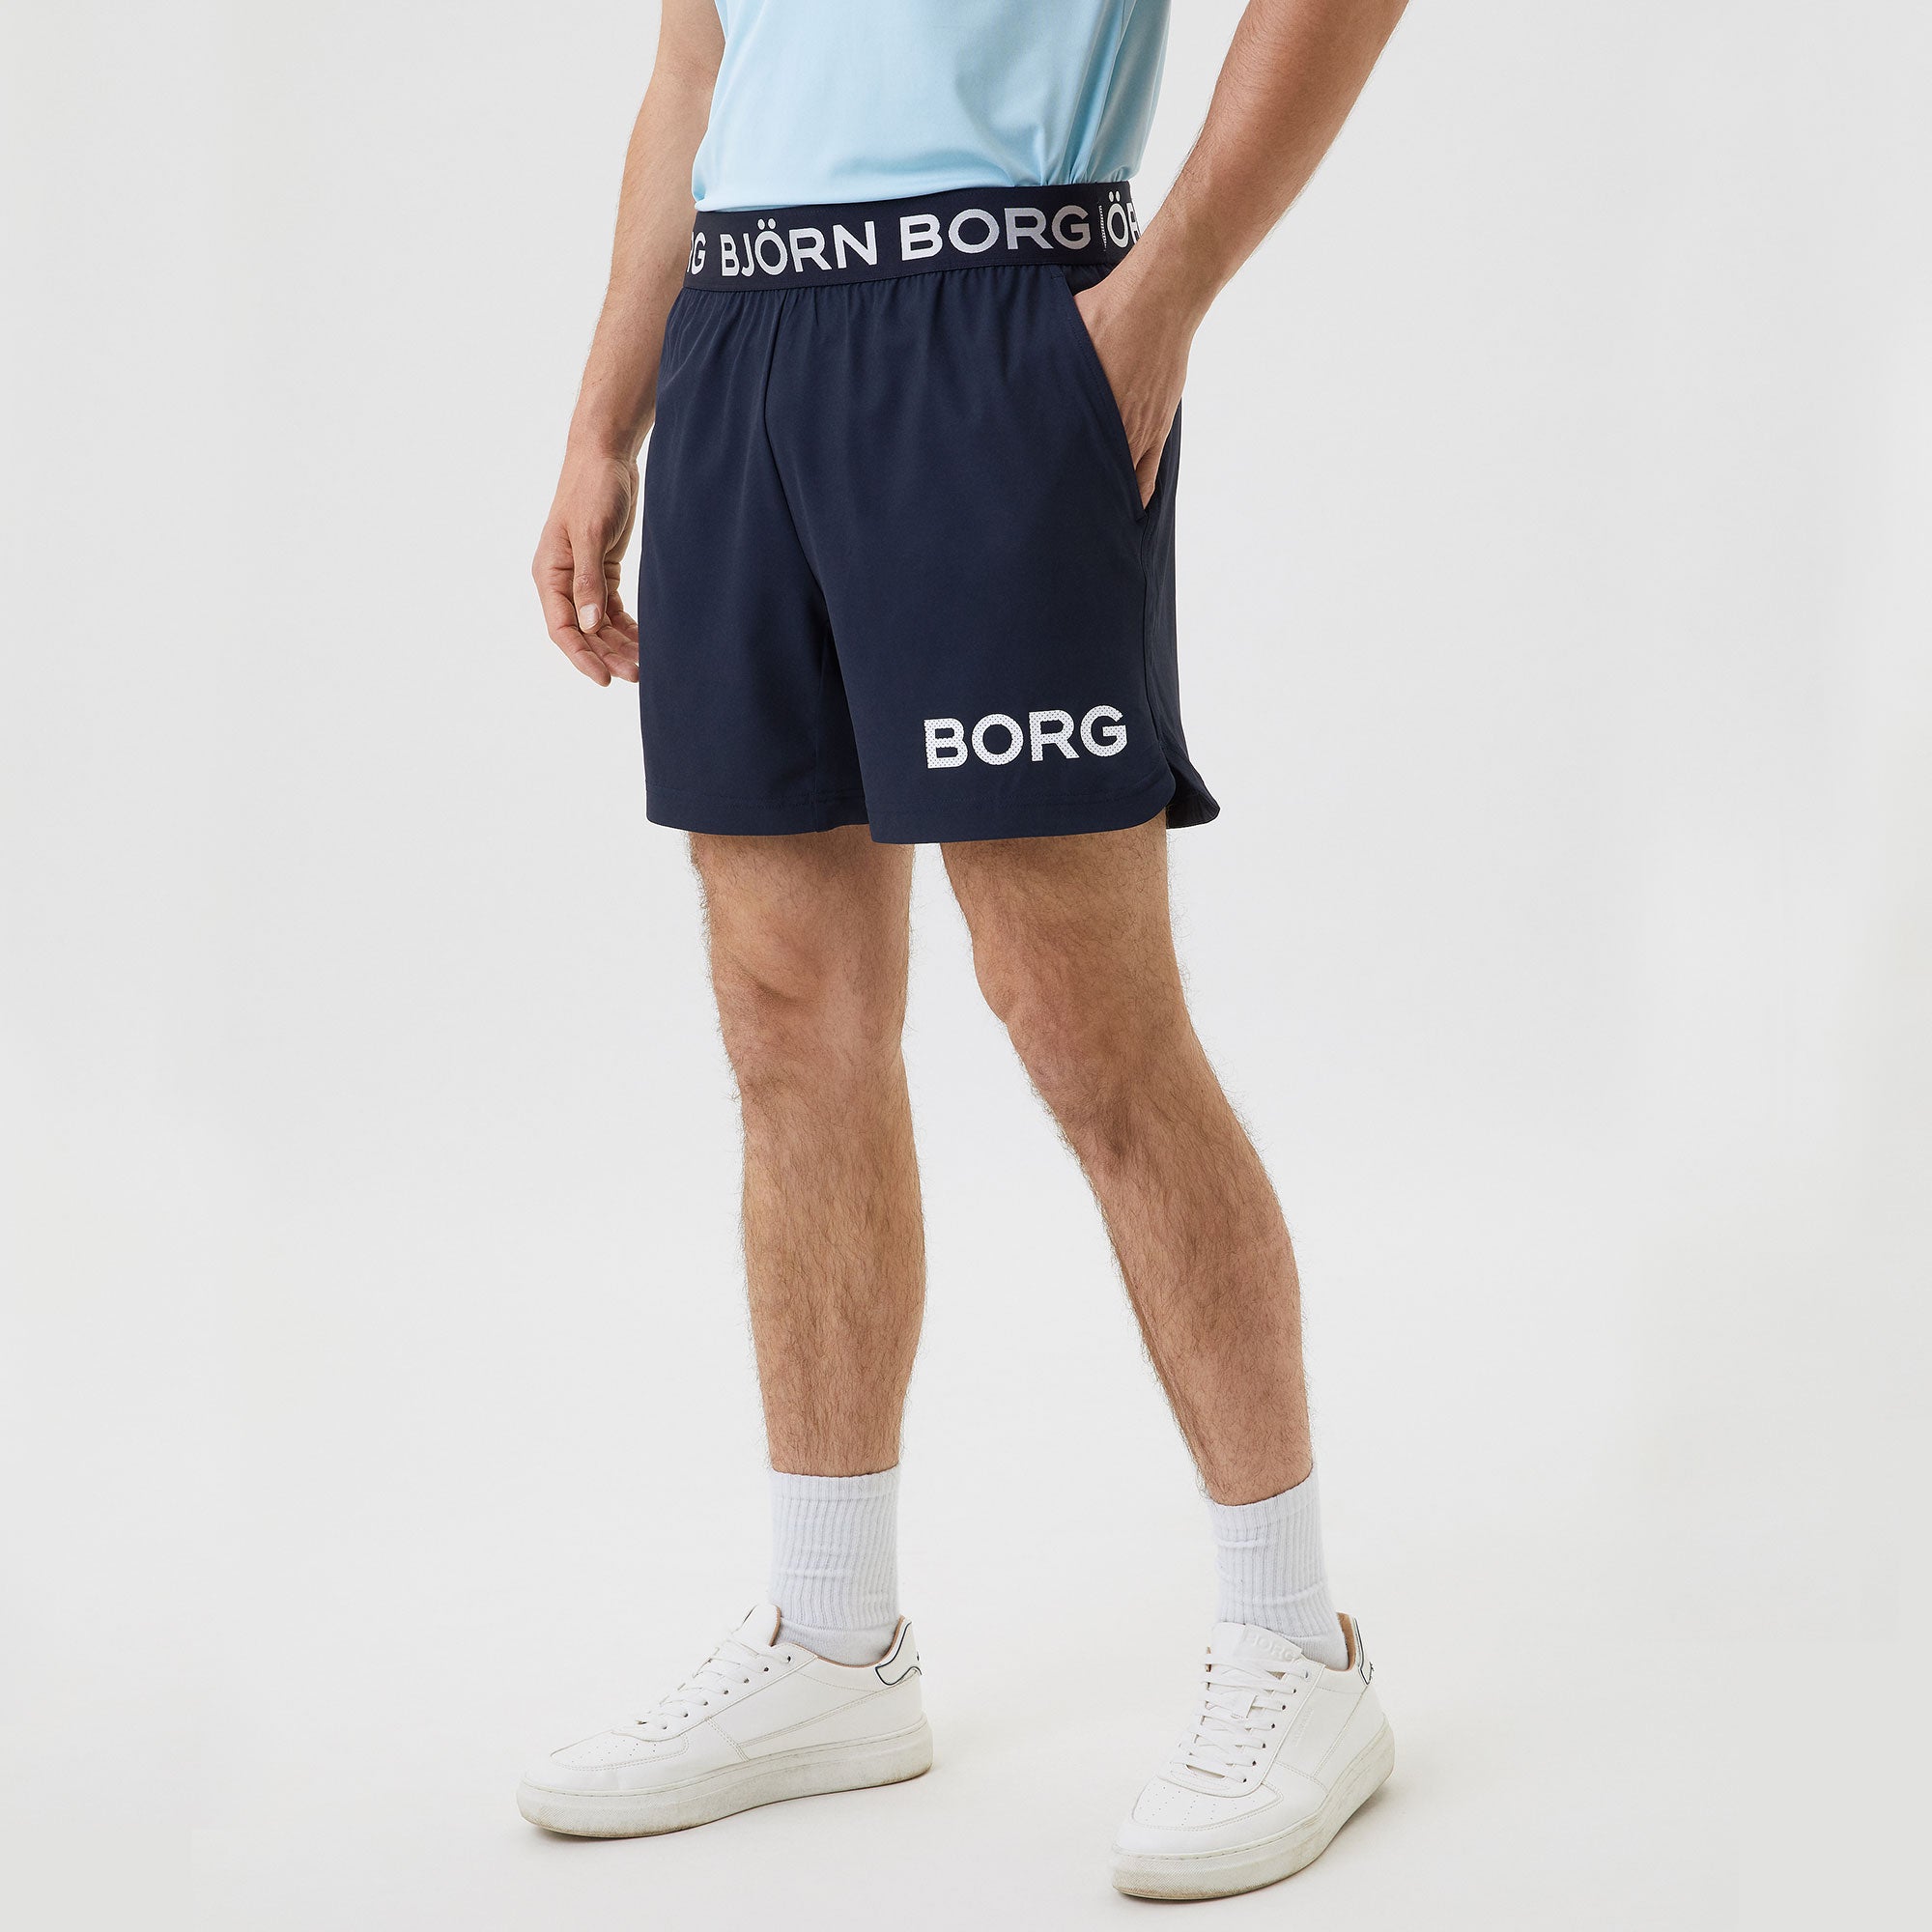 Björn Borg BORG Men's Short Shorts - Dark Blue (1)